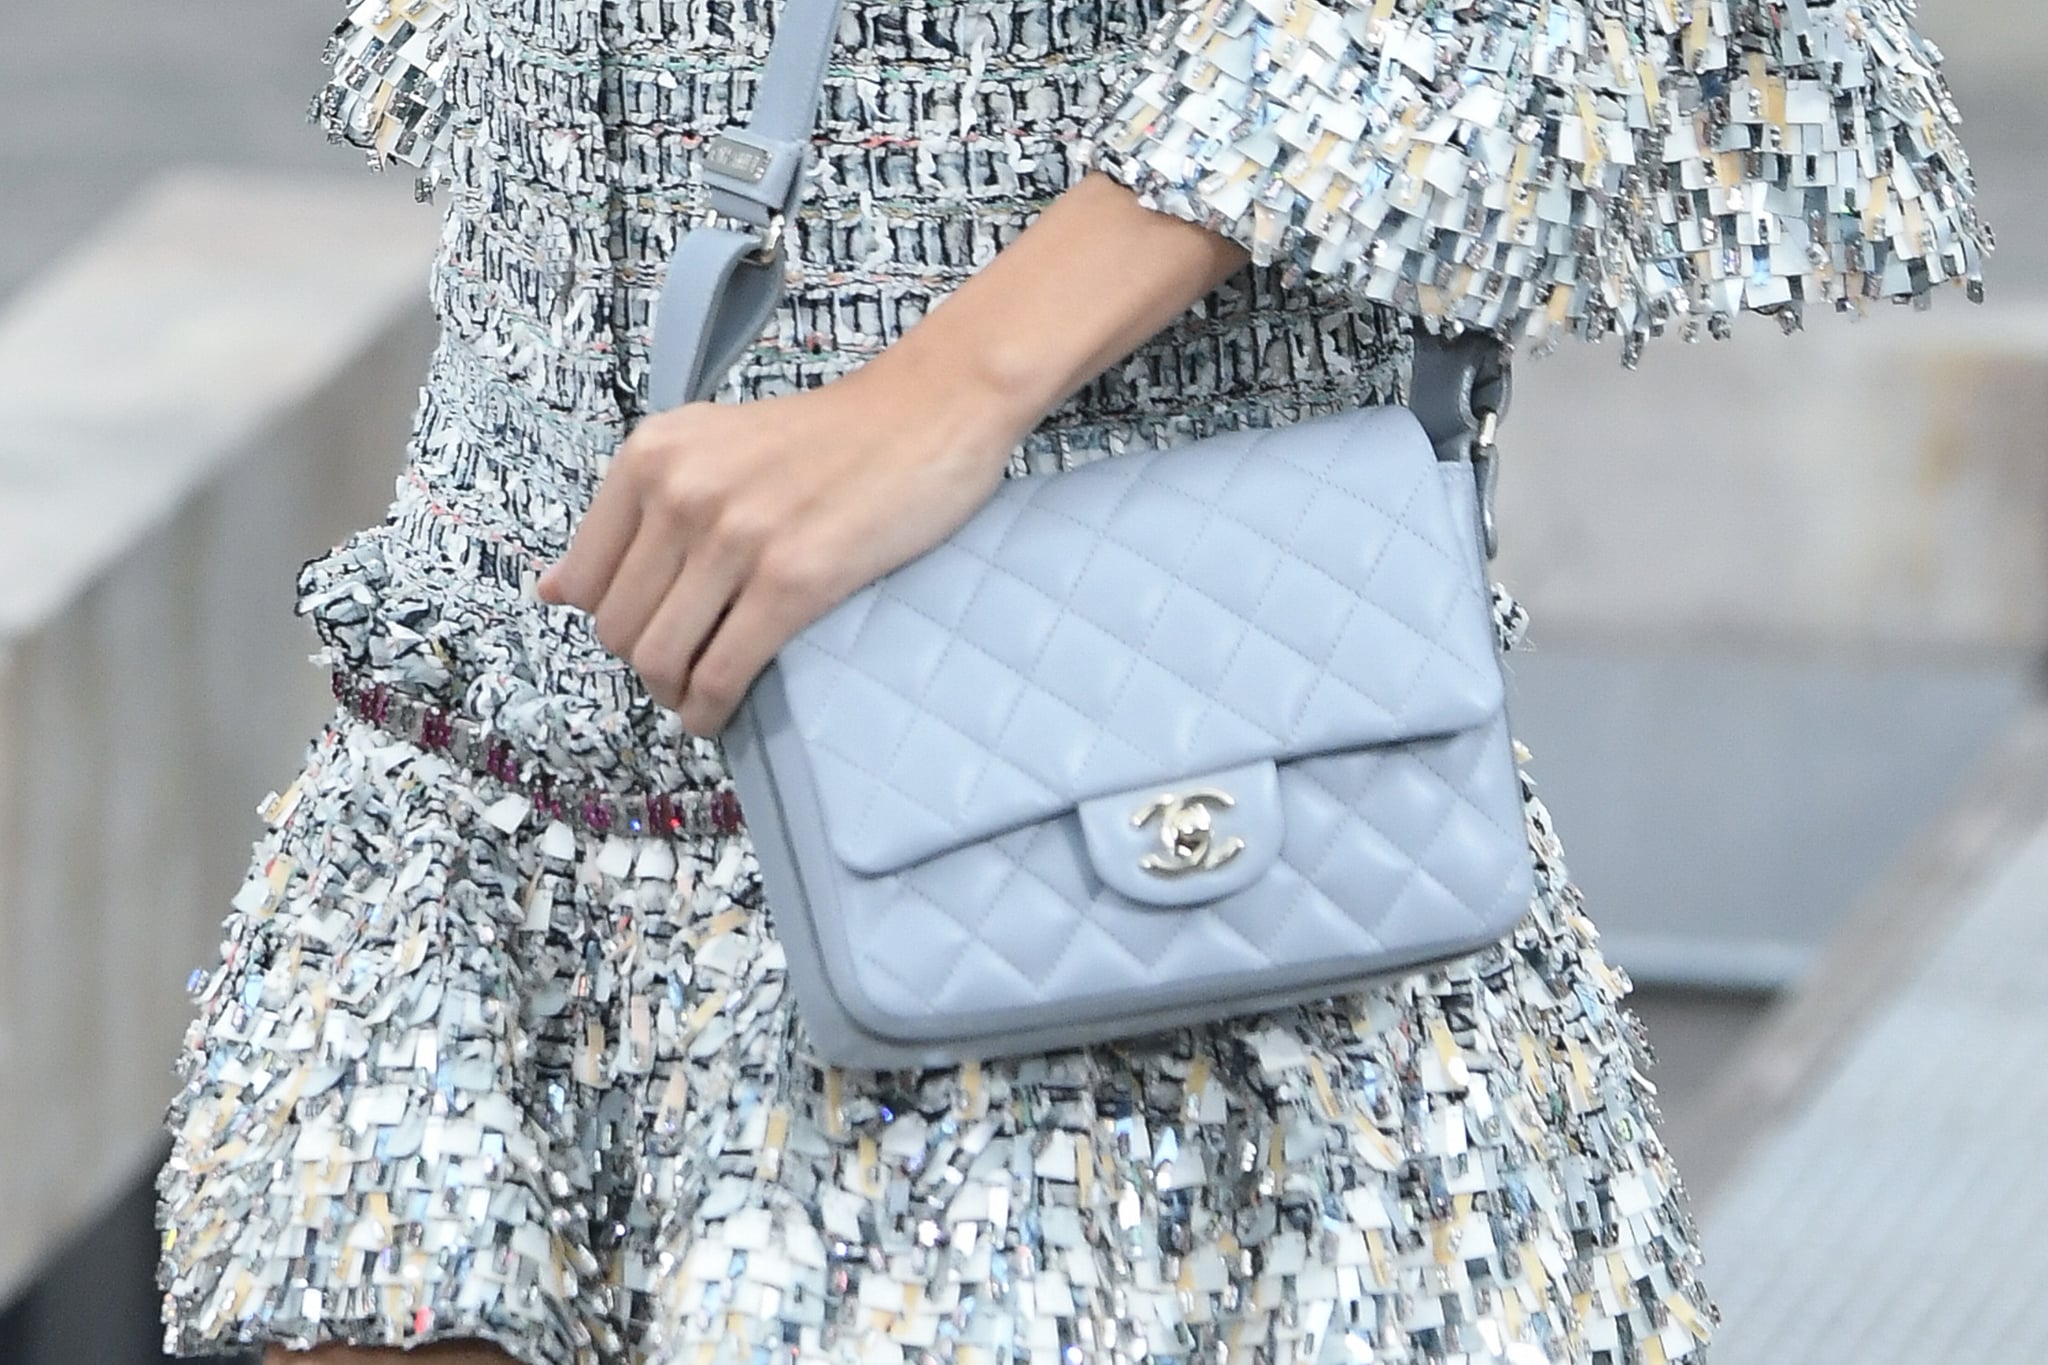 Sydne Style wears chanel navy blue chain bag for summer handbag trends   Sydne Style